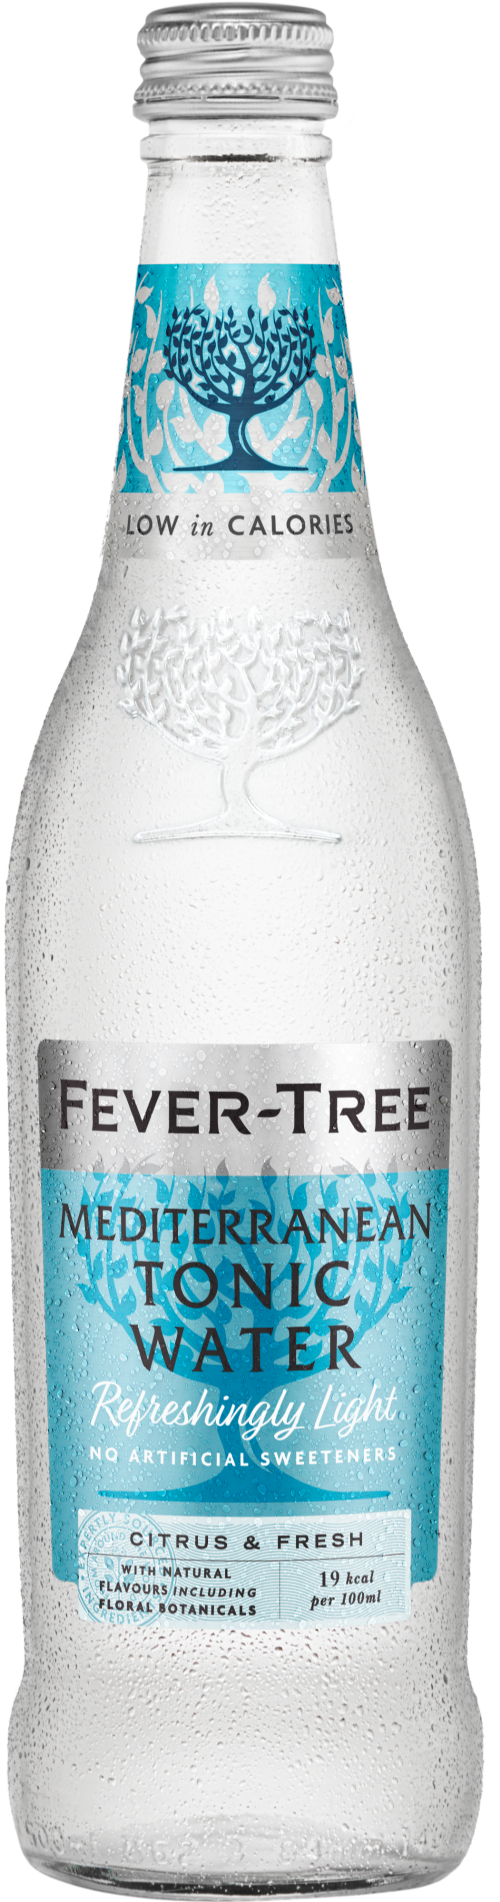 FEVER-TREE Refreshingly Light Mediterranean Tonic Water500ml